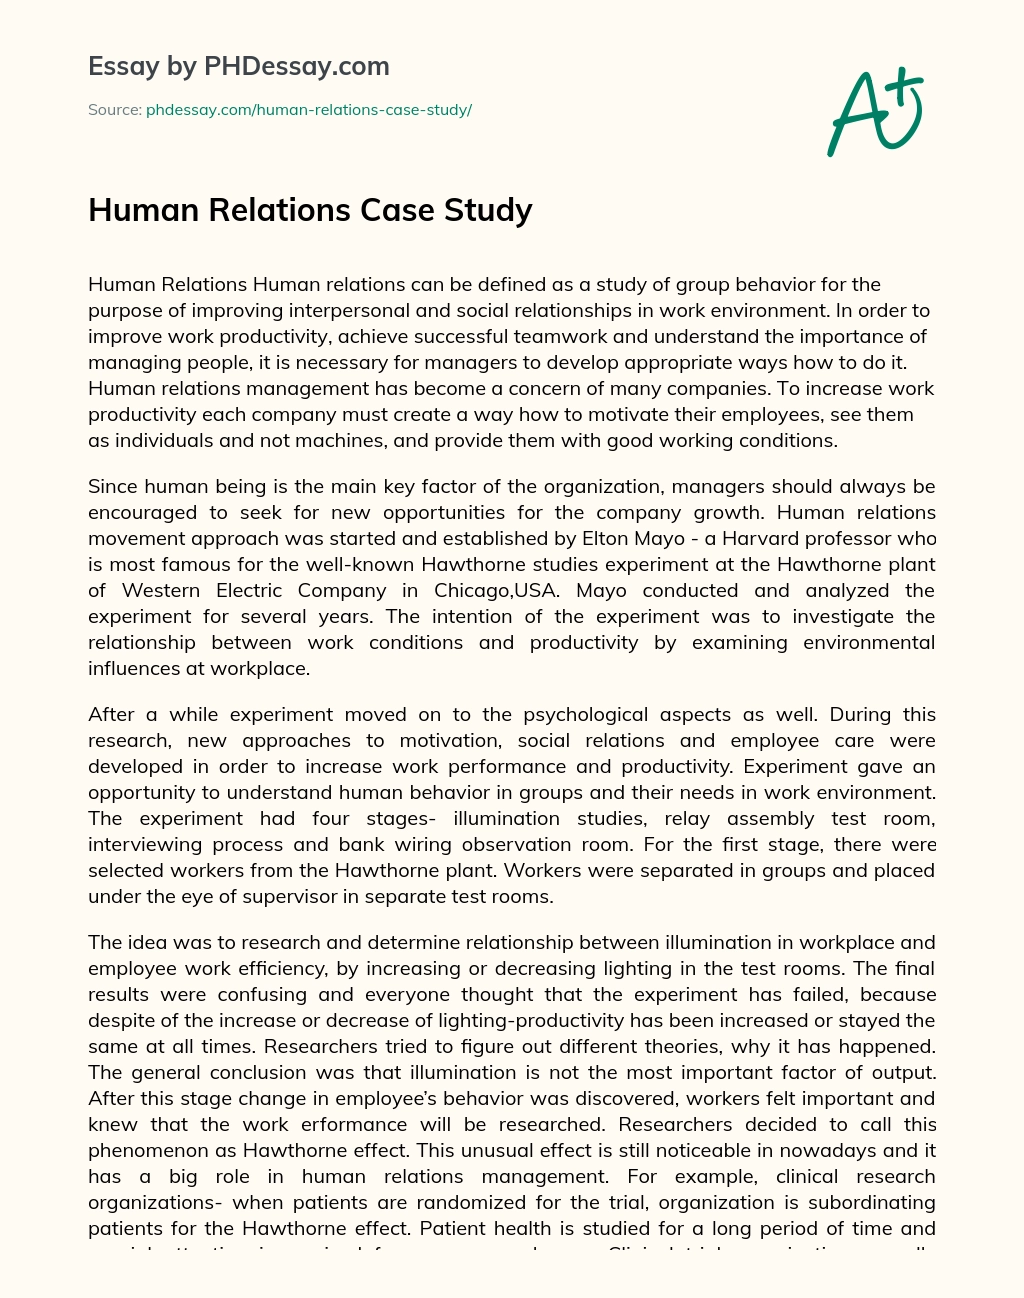 Human Relations Case Study essay